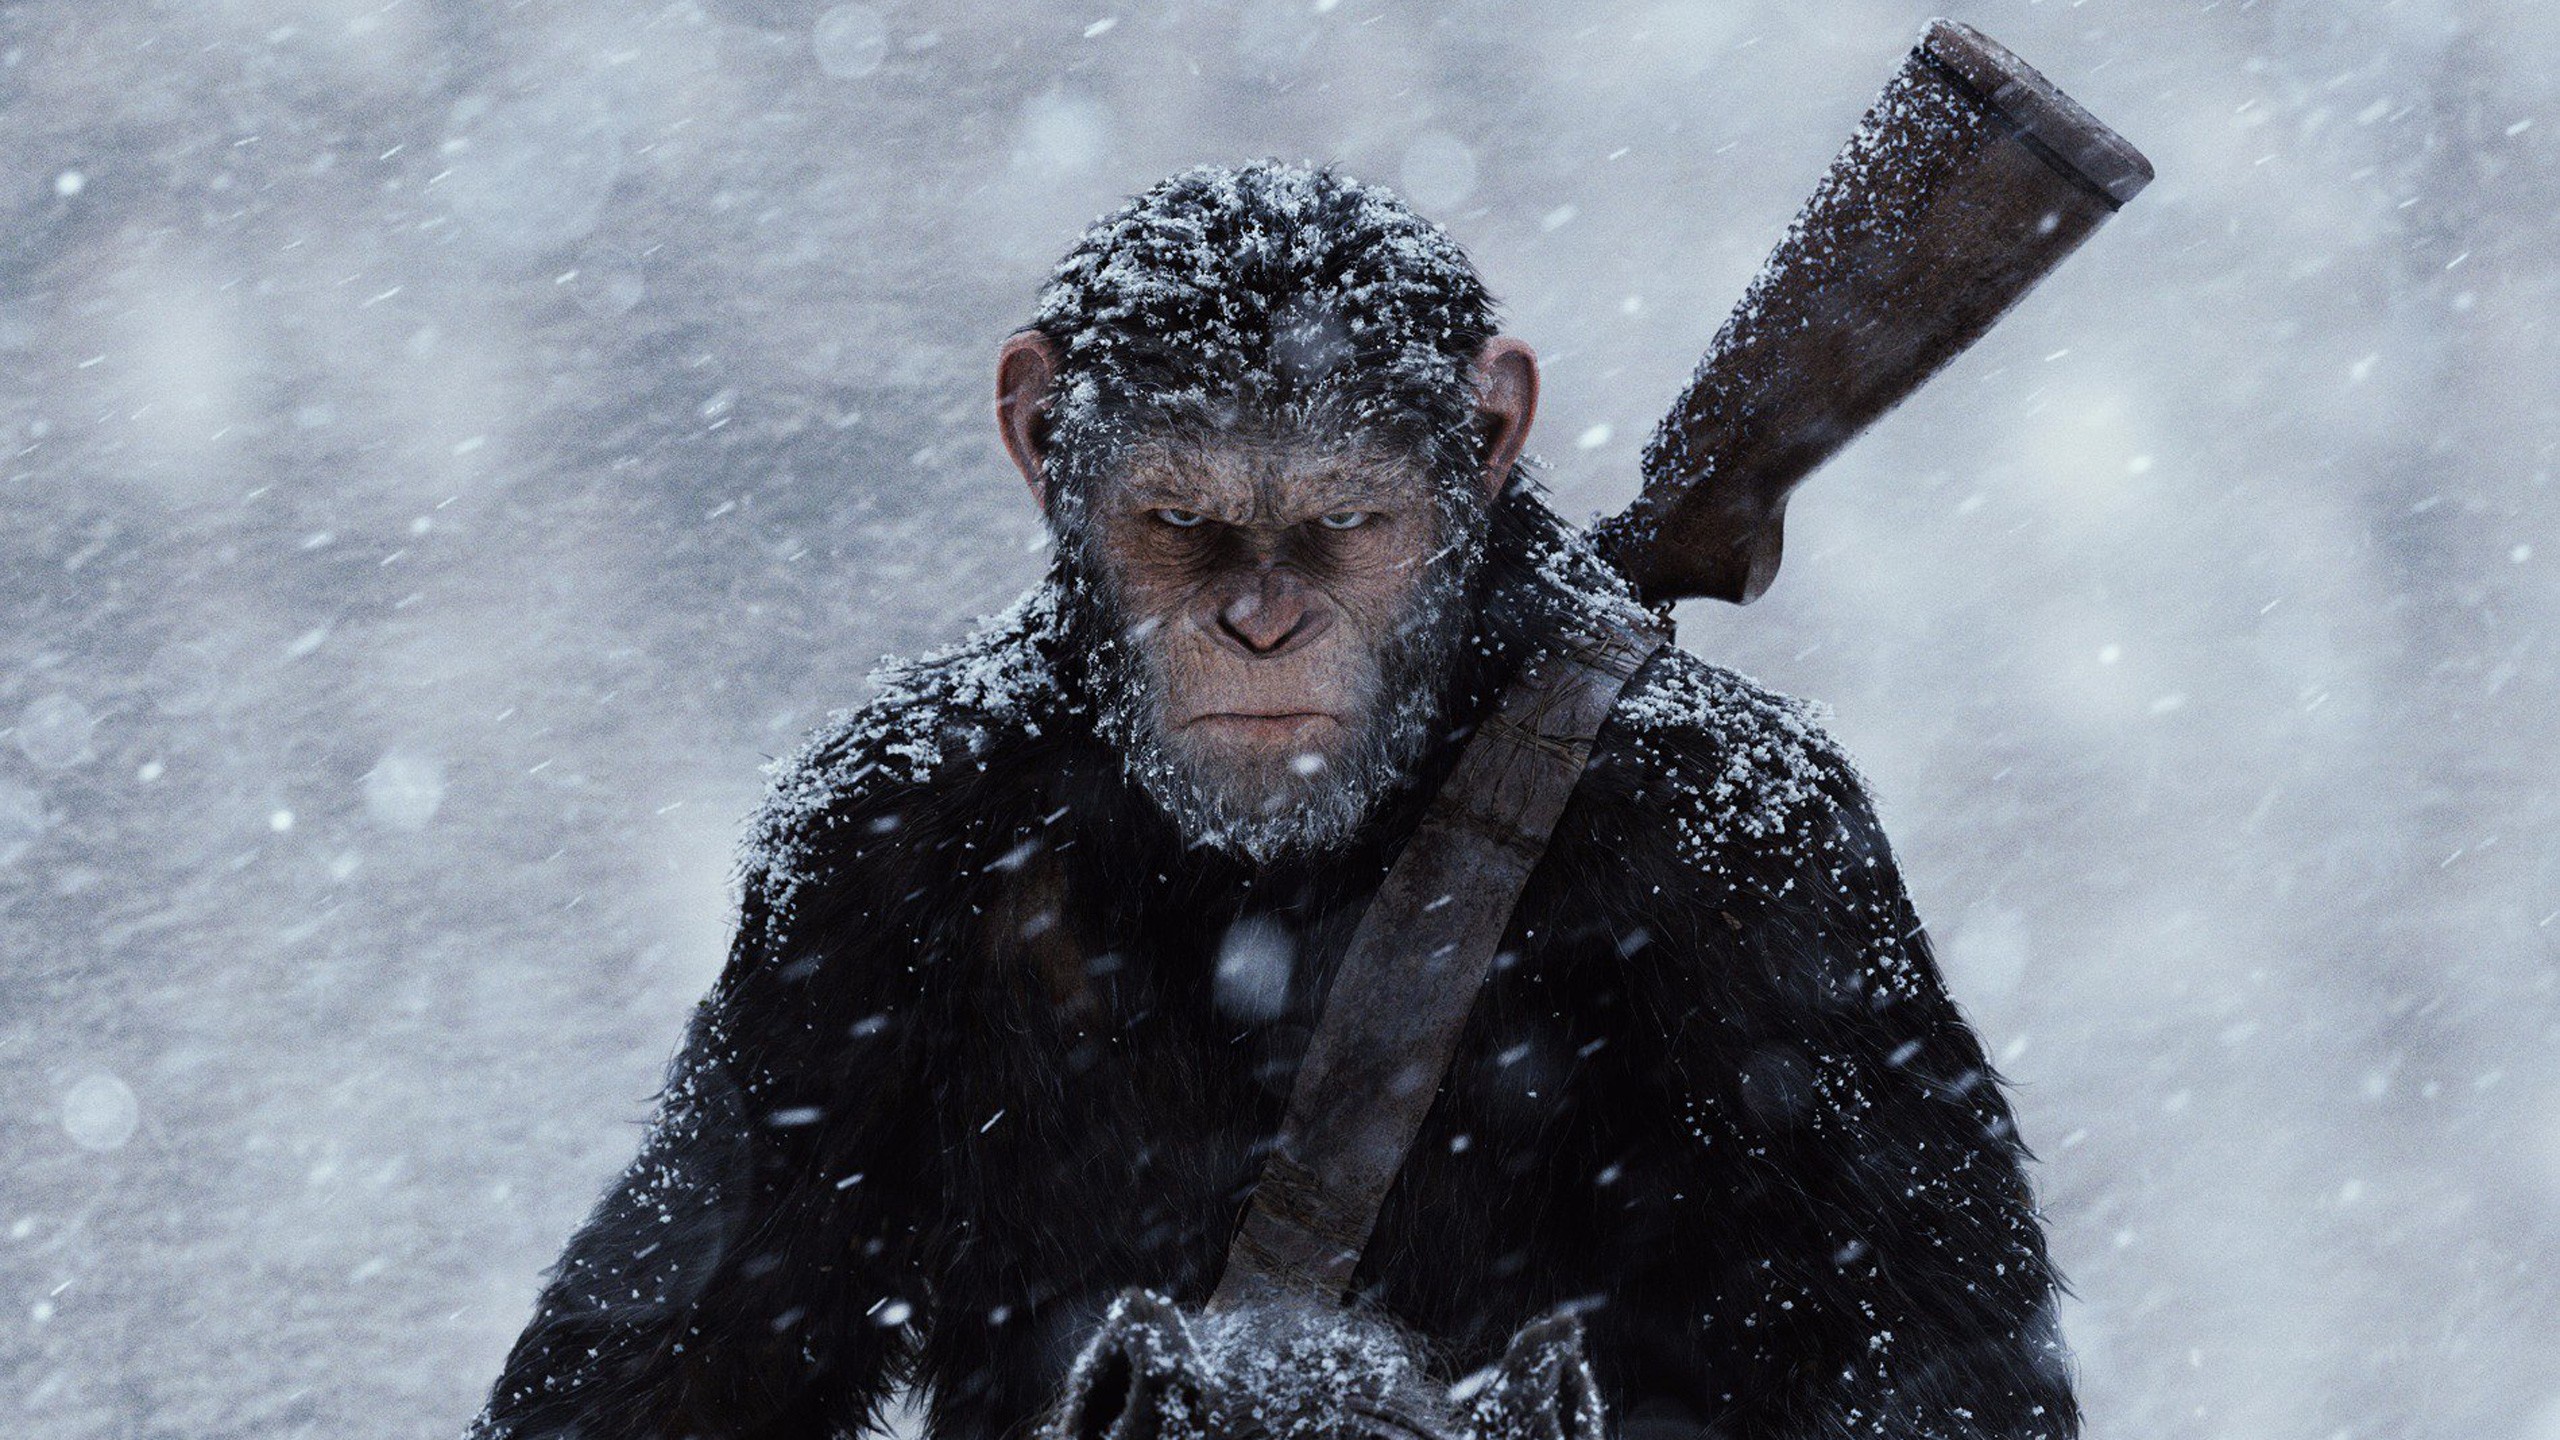 Disney'in yeni Planet of the Apes serisi devam niteliğinde olacak